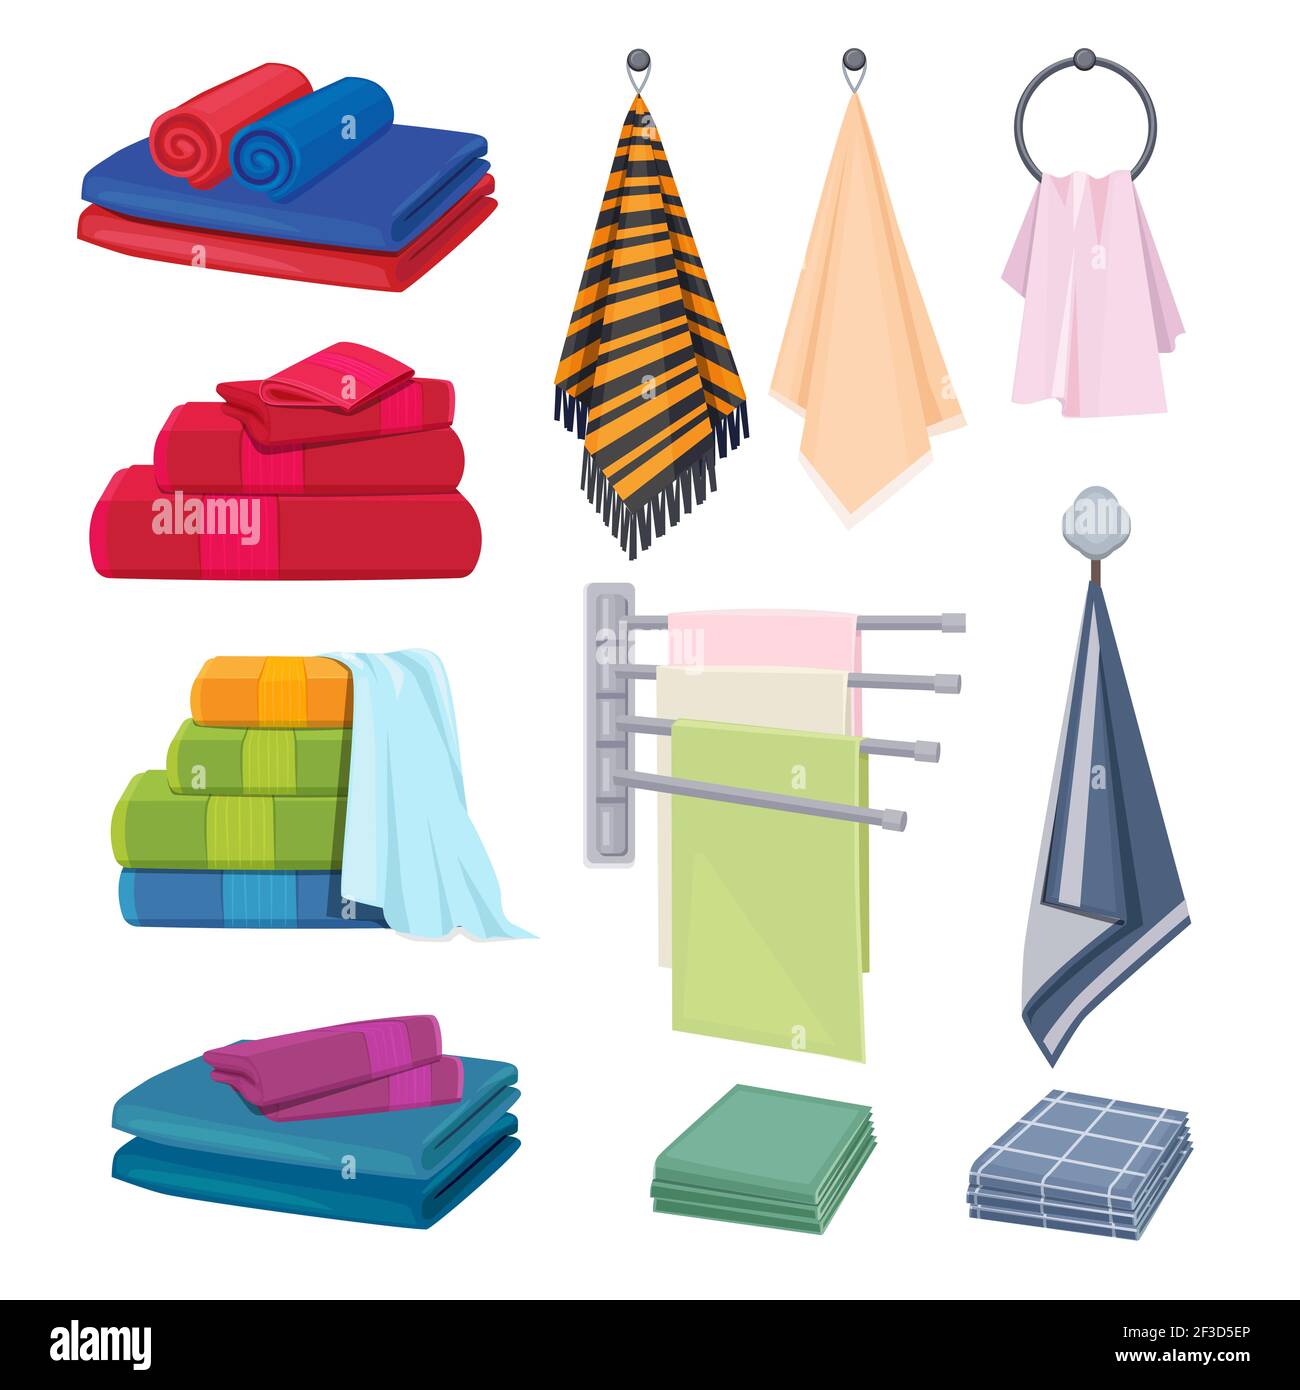 https://c8.alamy.com/comp/2F3D5EP/kitchen-rags-textile-cotton-fabrics-colored-blanket-towels-hygiene-elements-vector-cartoon-collection-2F3D5EP.jpg